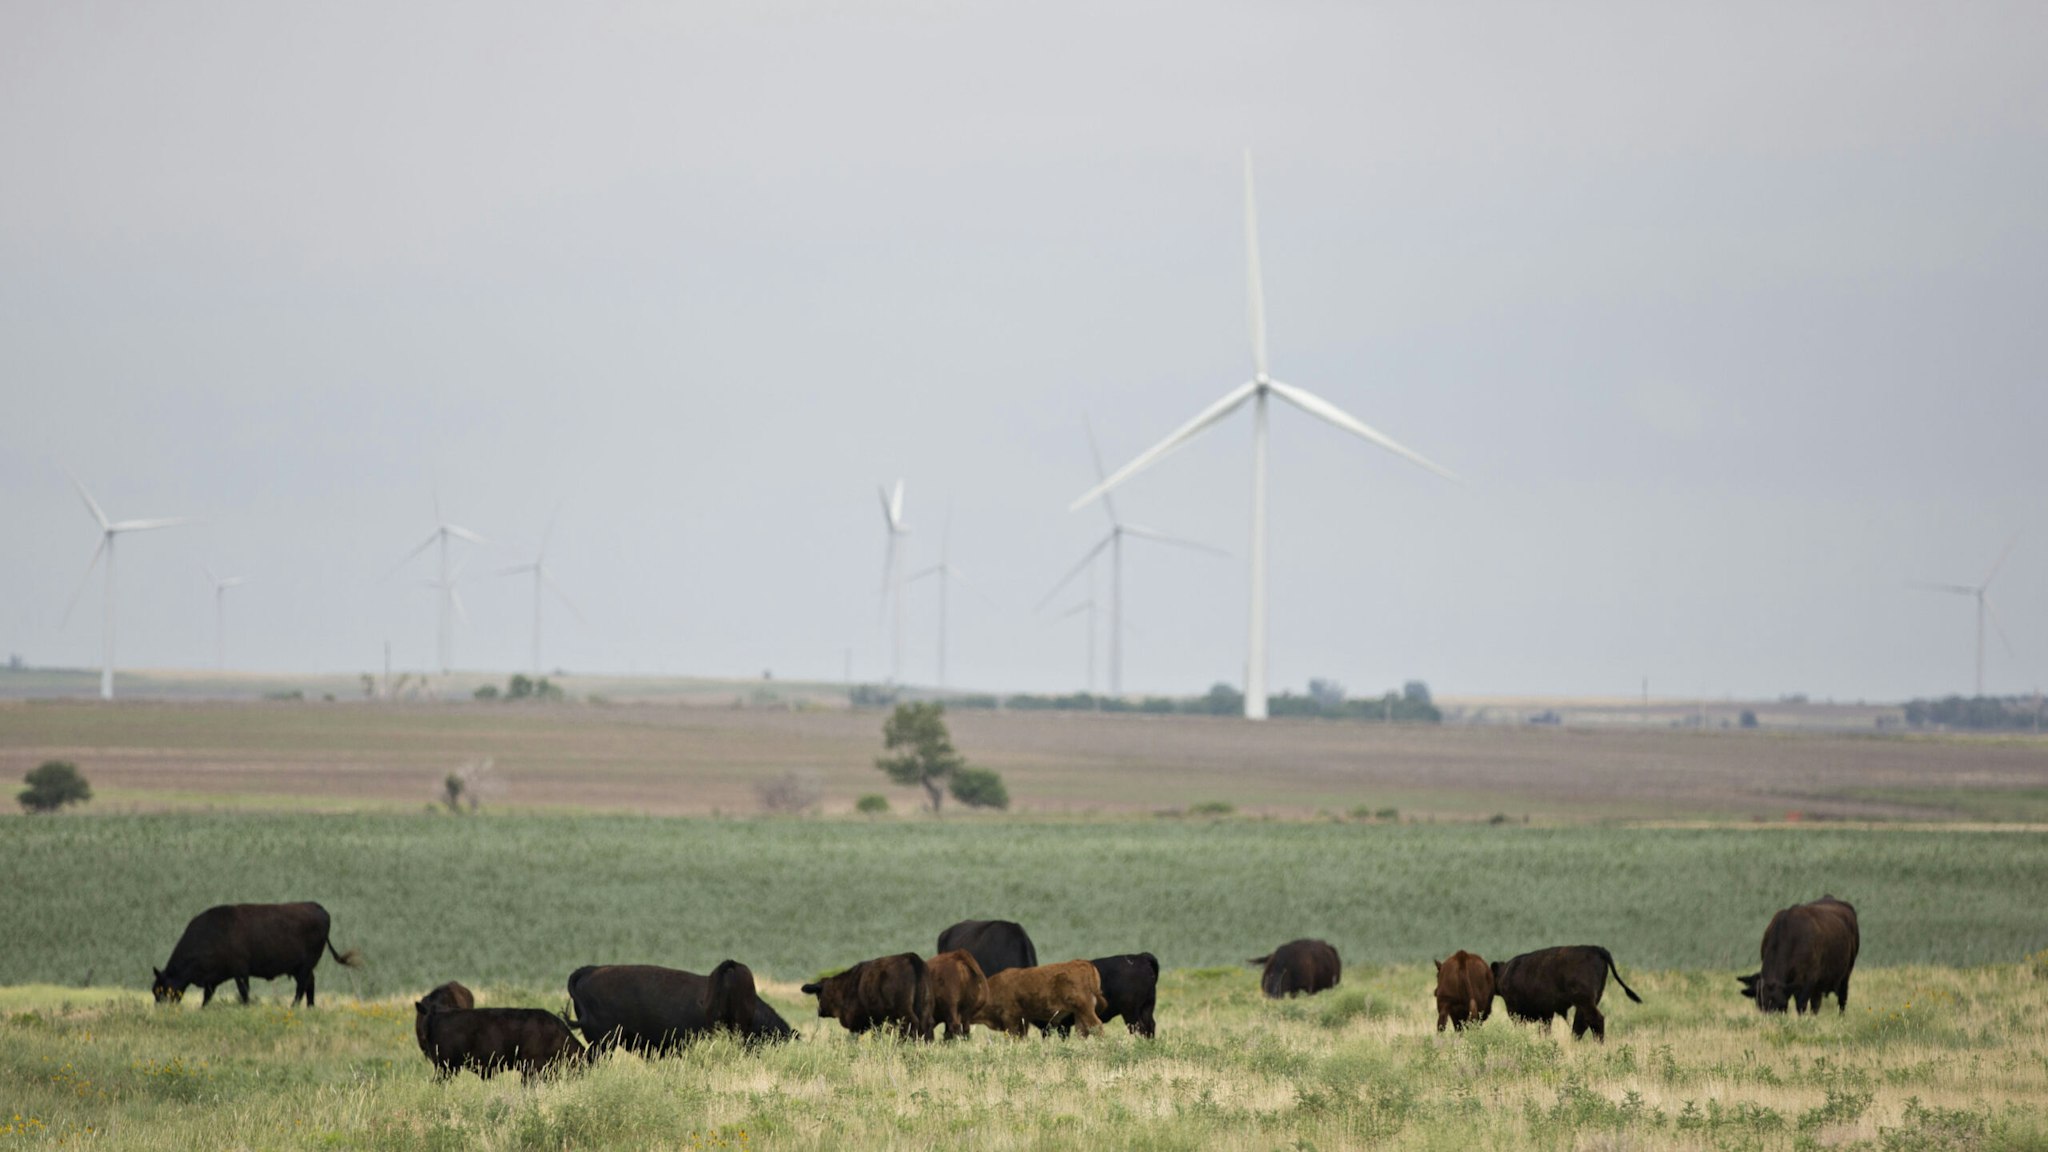 Cattle graze near wind turbines at the Invenergy LLC Buckeye Wind Energy Center in Hays, Kansas